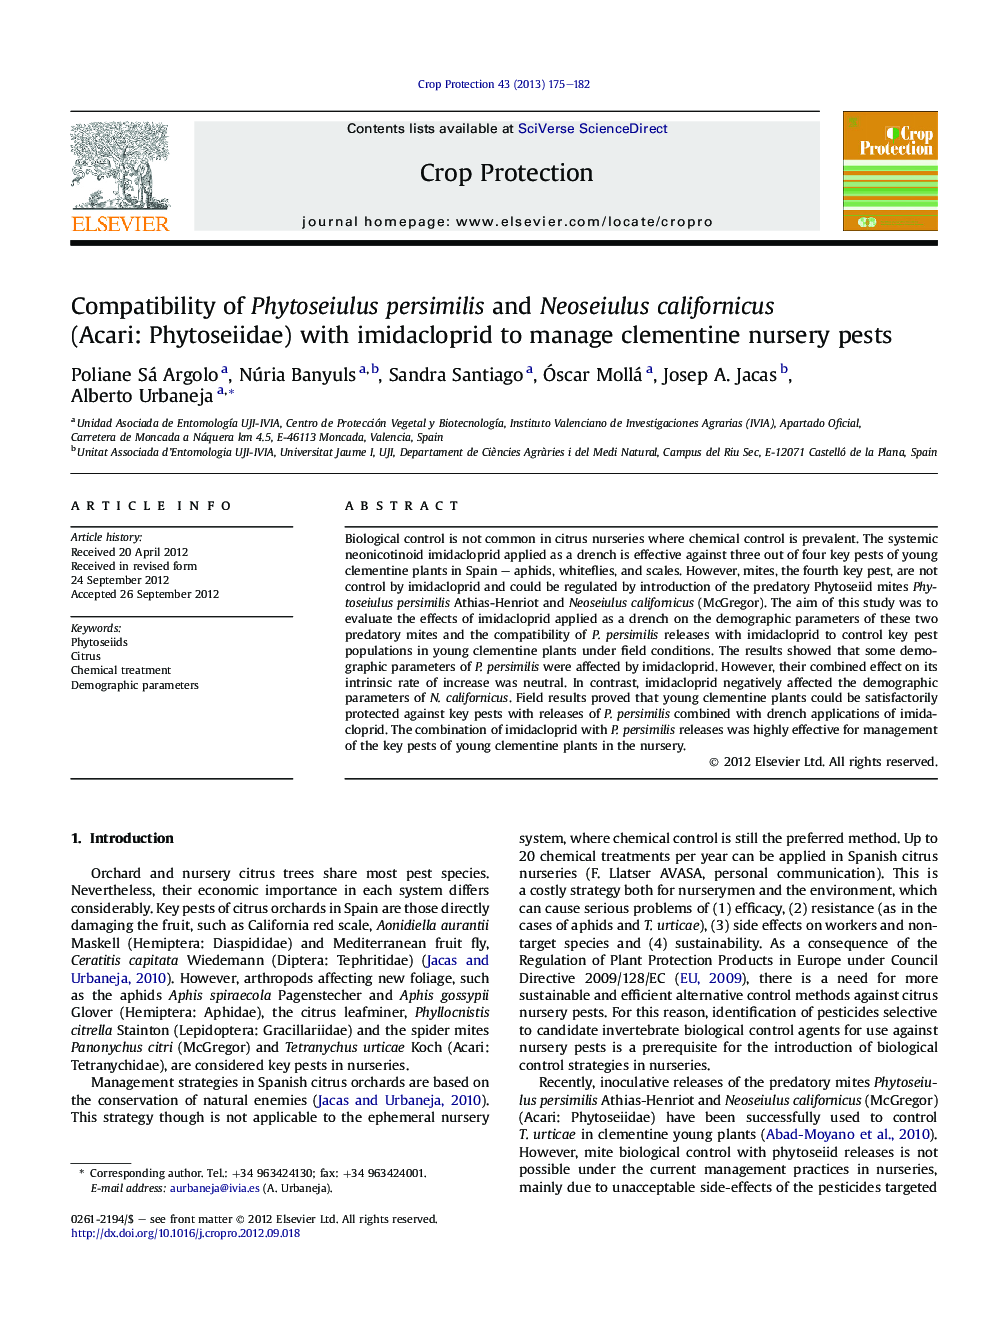 Compatibility of Phytoseiulus persimilis and Neoseiulus californicus (Acari: Phytoseiidae) with imidacloprid to manage clementine nursery pests